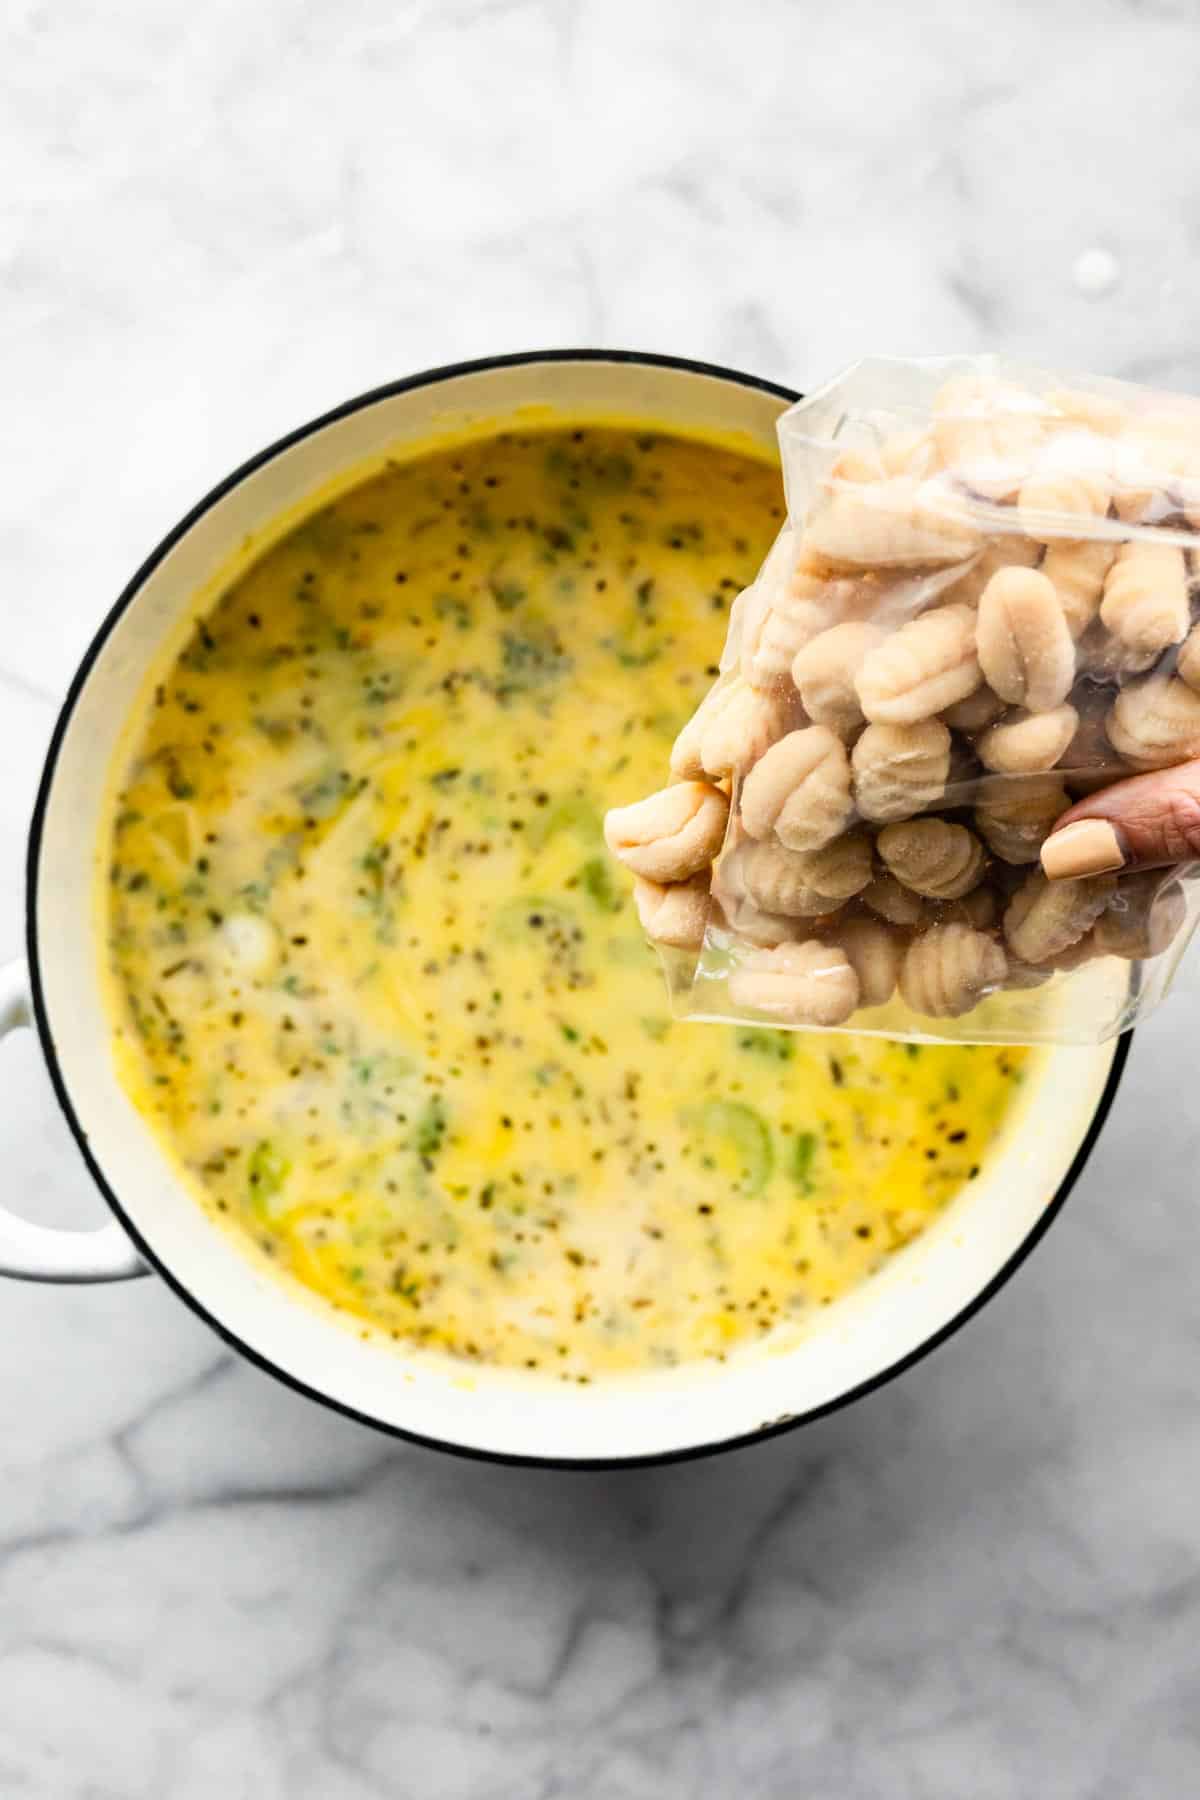 Gluten free gnocchi poured into a pot of creamy chicken and gnocchi soup.